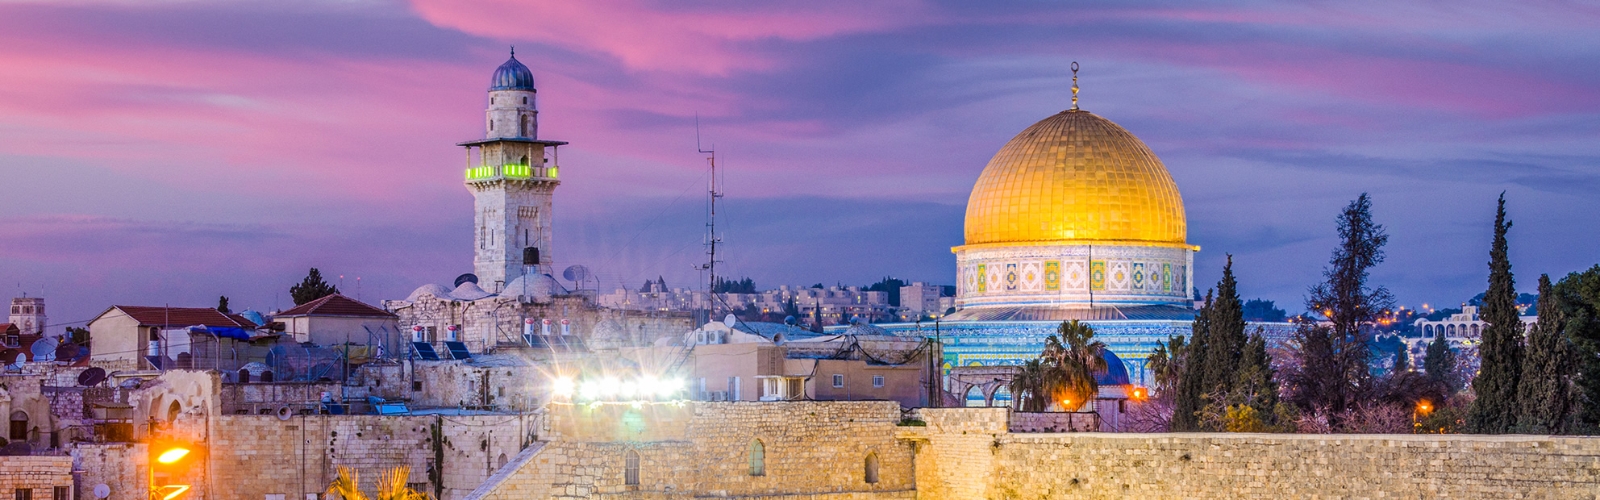 Israel Holidays 2022/2023 Package Holidays to Israel Virgin